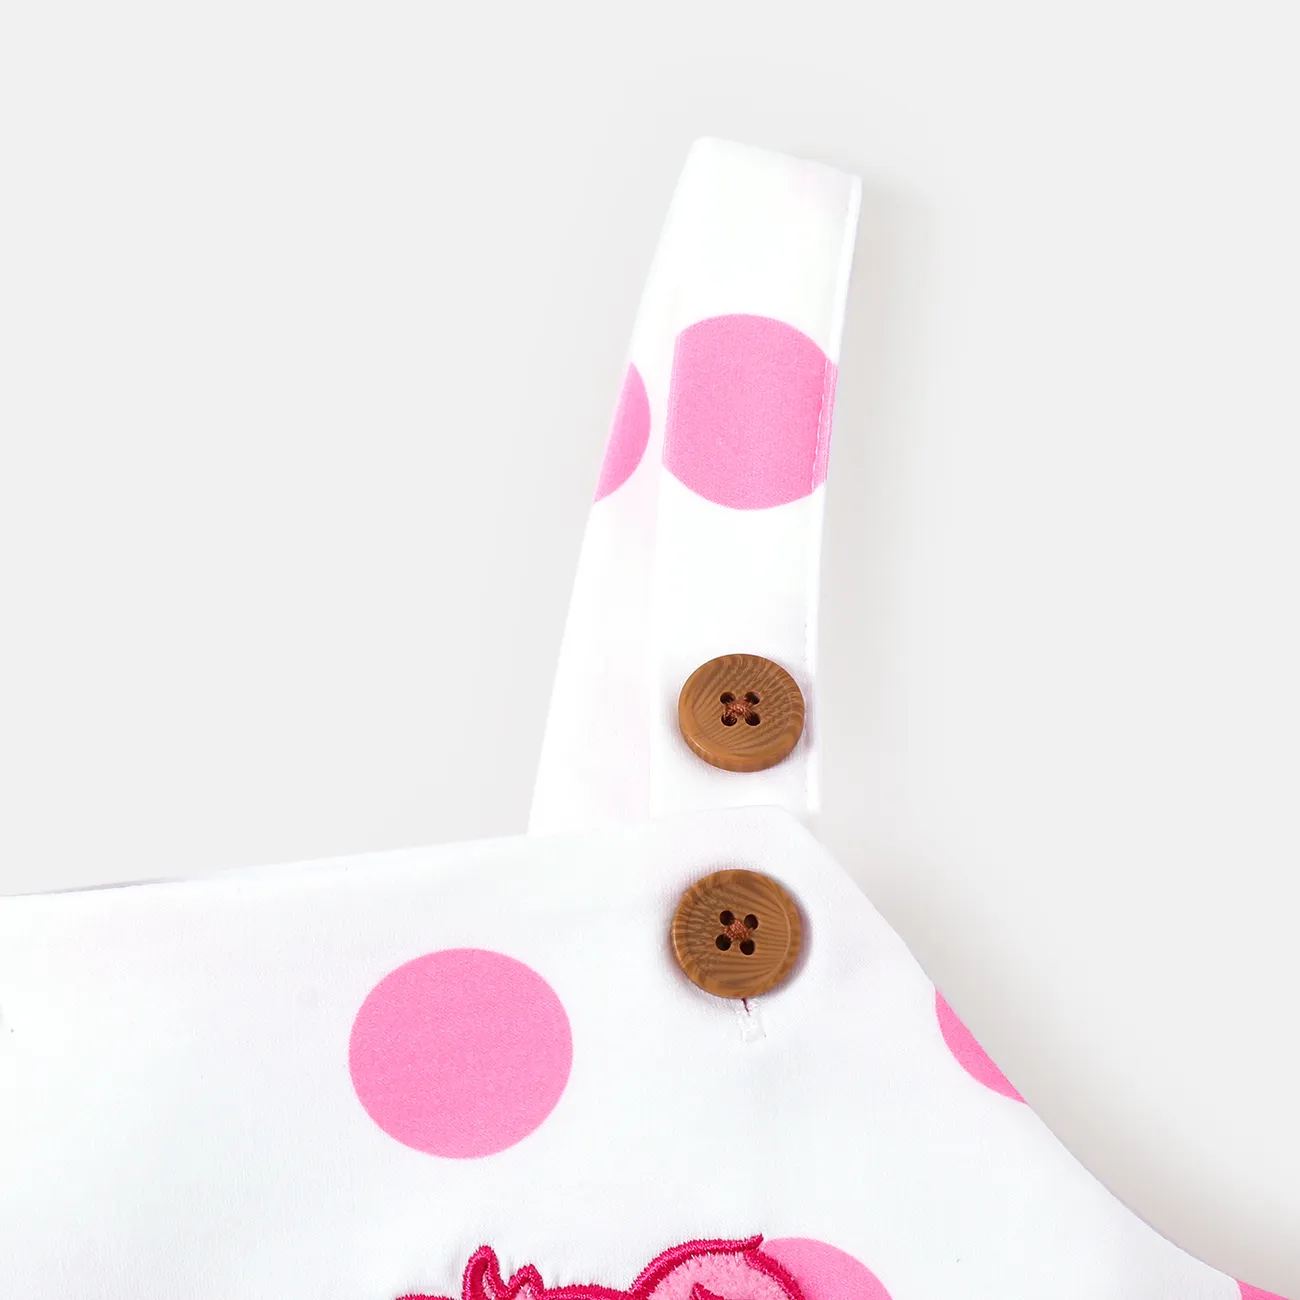 Care Bears Baby/Toddler Girl 3pcs Naia™ Flutter-sleeve Ribbed Top & Slip Dress & Headband Set Pink big image 1